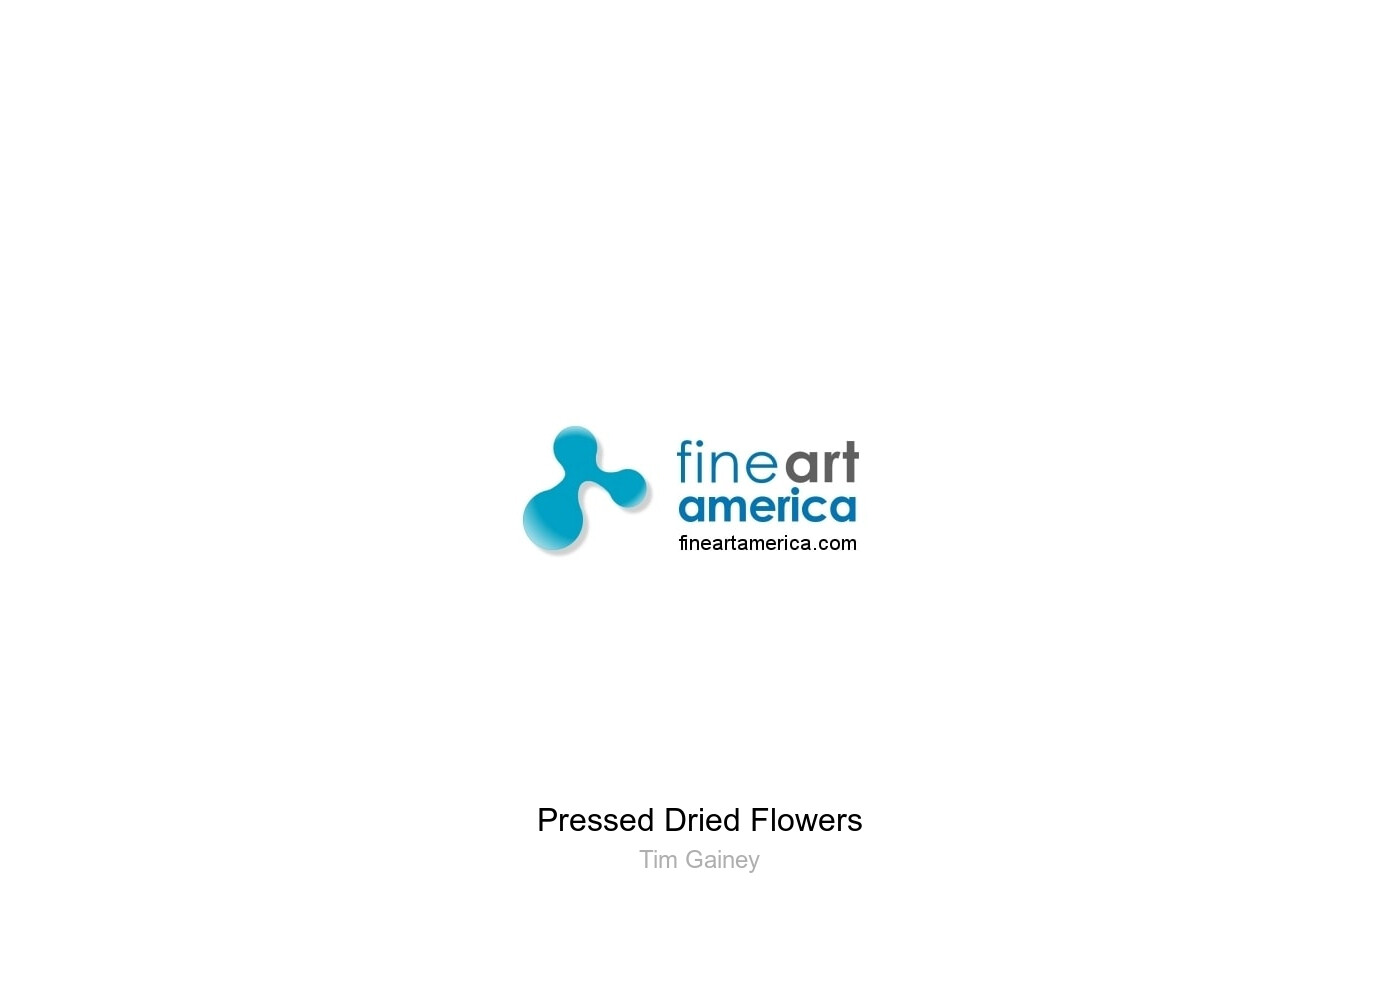 Pressed Dried Flowers by Tim Gainey